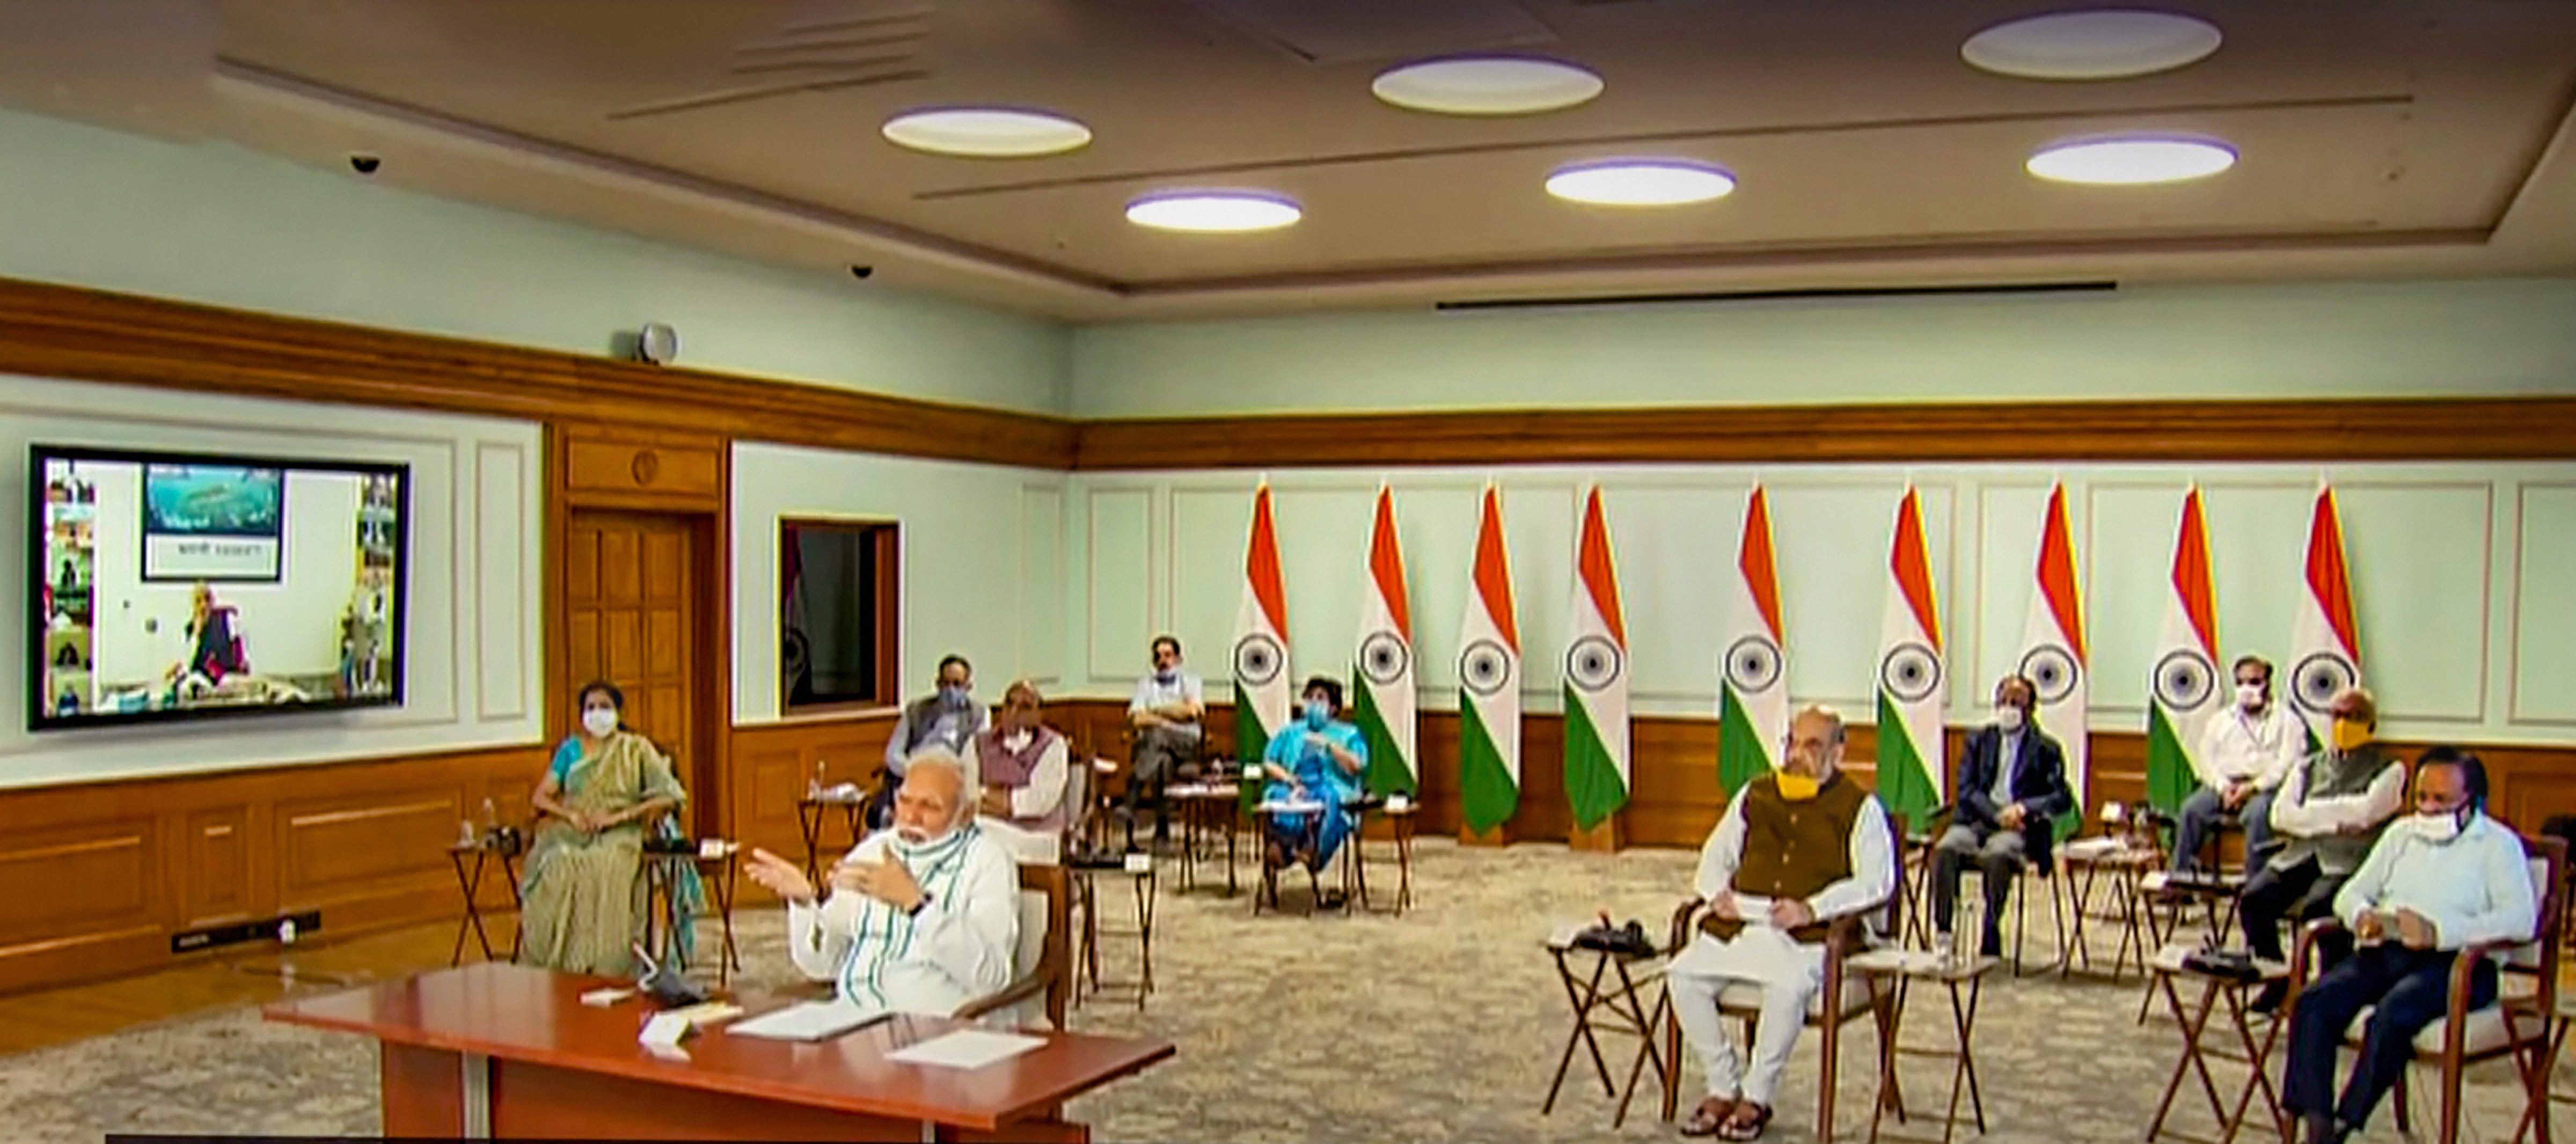 <p style="text-align: right;">وزیر اعظم نریندر مودی ، وزیر داخلہ امیت شاہ ، وزیر صحت ہرش وردھن اور دیگر معززین کے ہمراہ ، مختلف ریاستوں کے وزرائے اعلی سے ویڈیو کانفرنسنگ کے ذریعے بات چیت کرتے ہوئے۔</p>